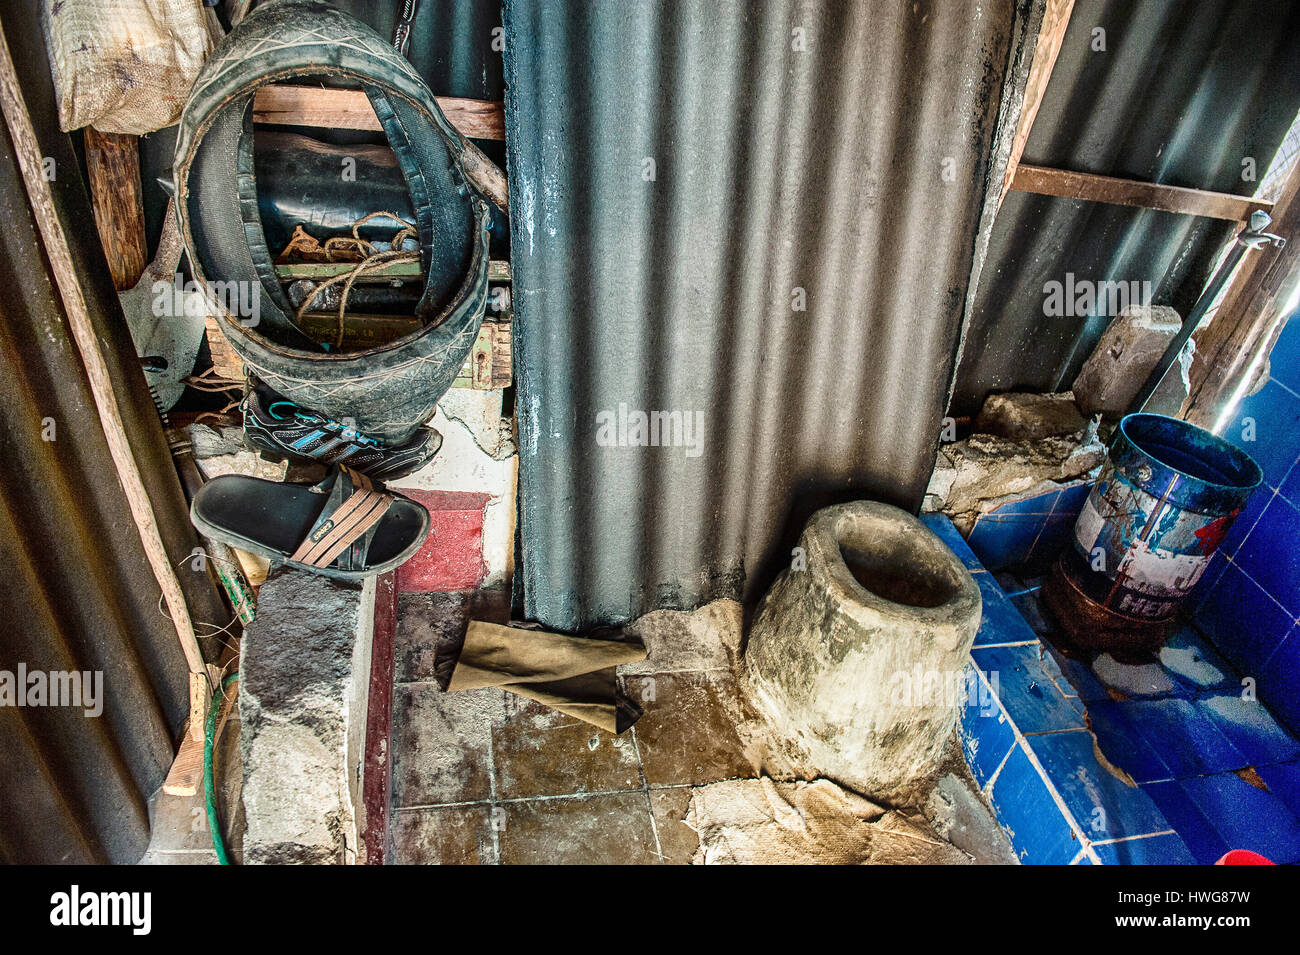 A bathroom of an house damaged by the fury of the hurricane Matthew over Baracoa, Cuba Stock Photo